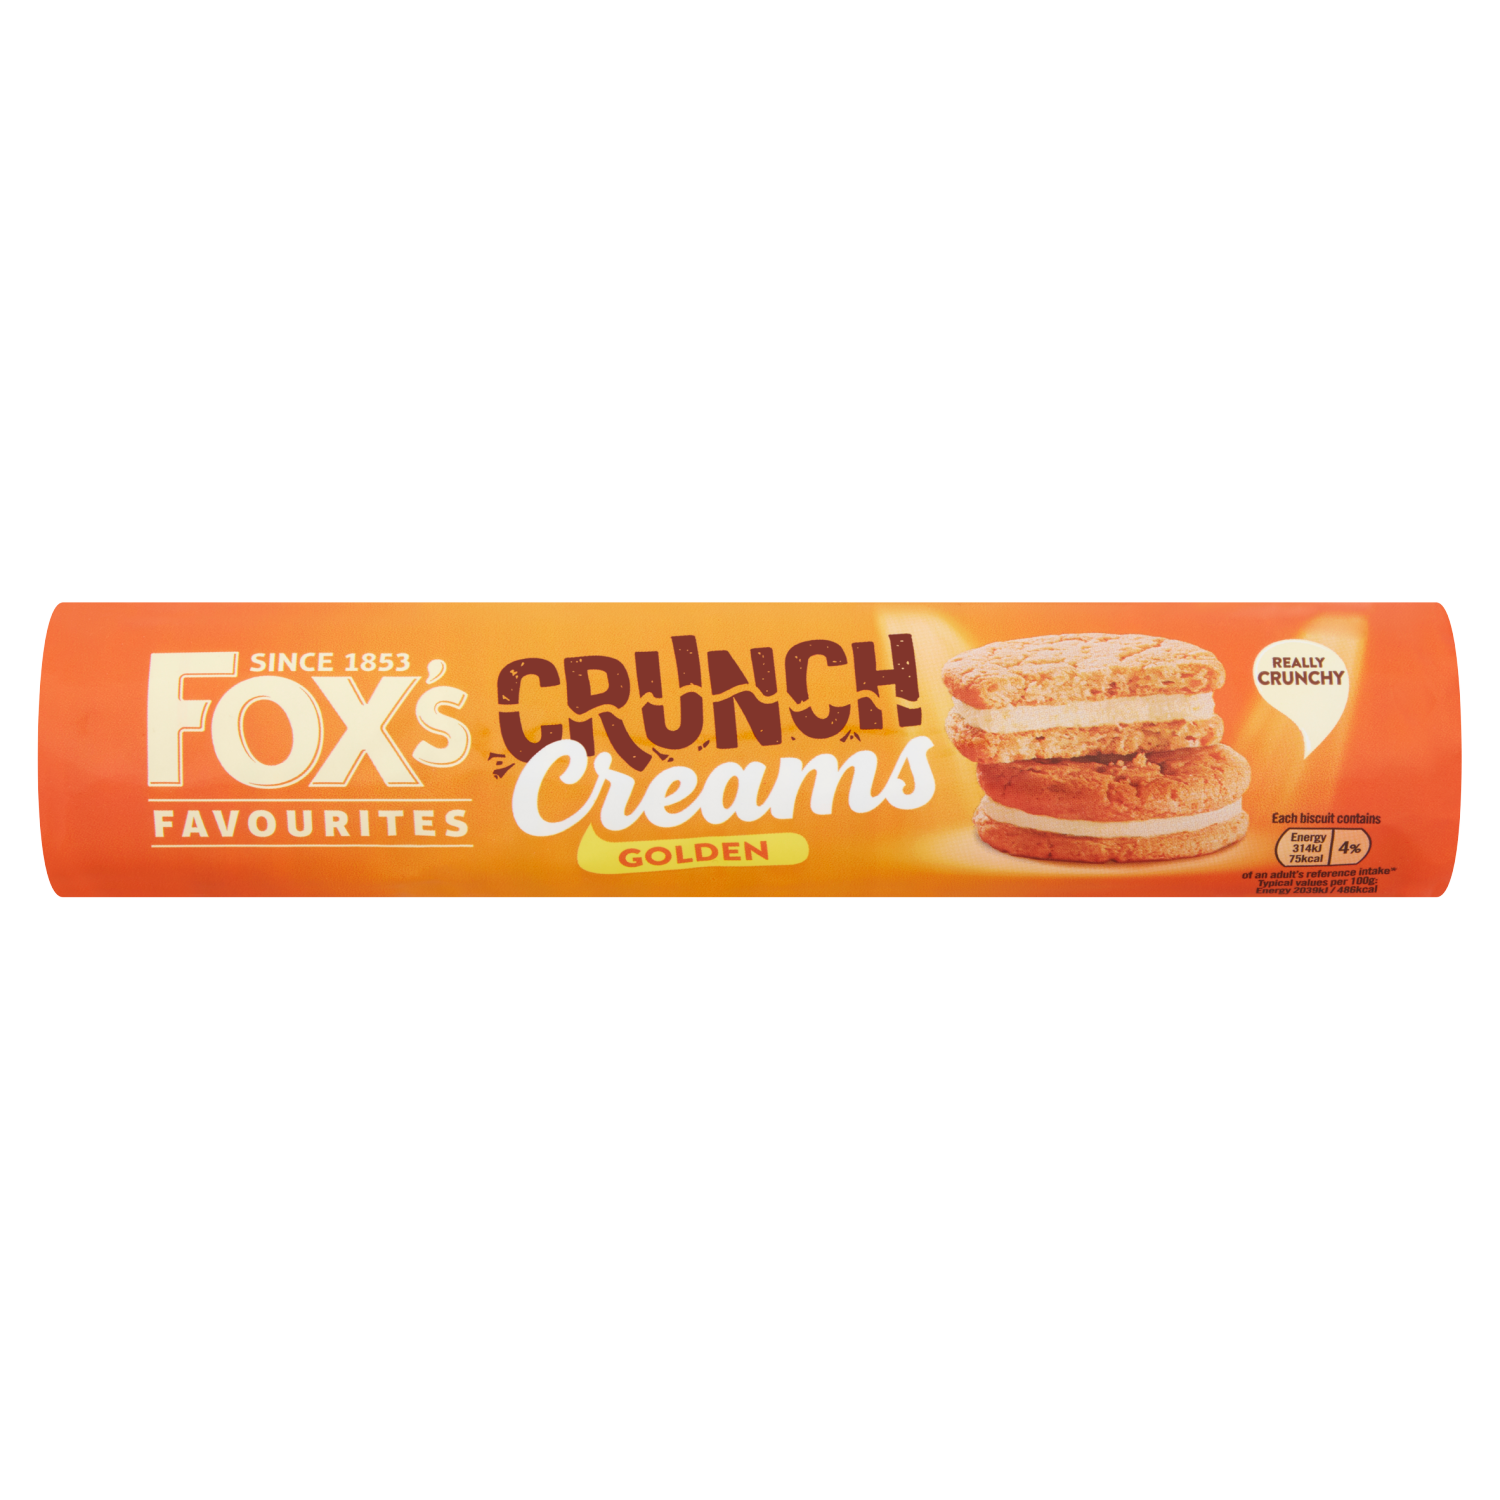 Fox's Crunch Creams Golden